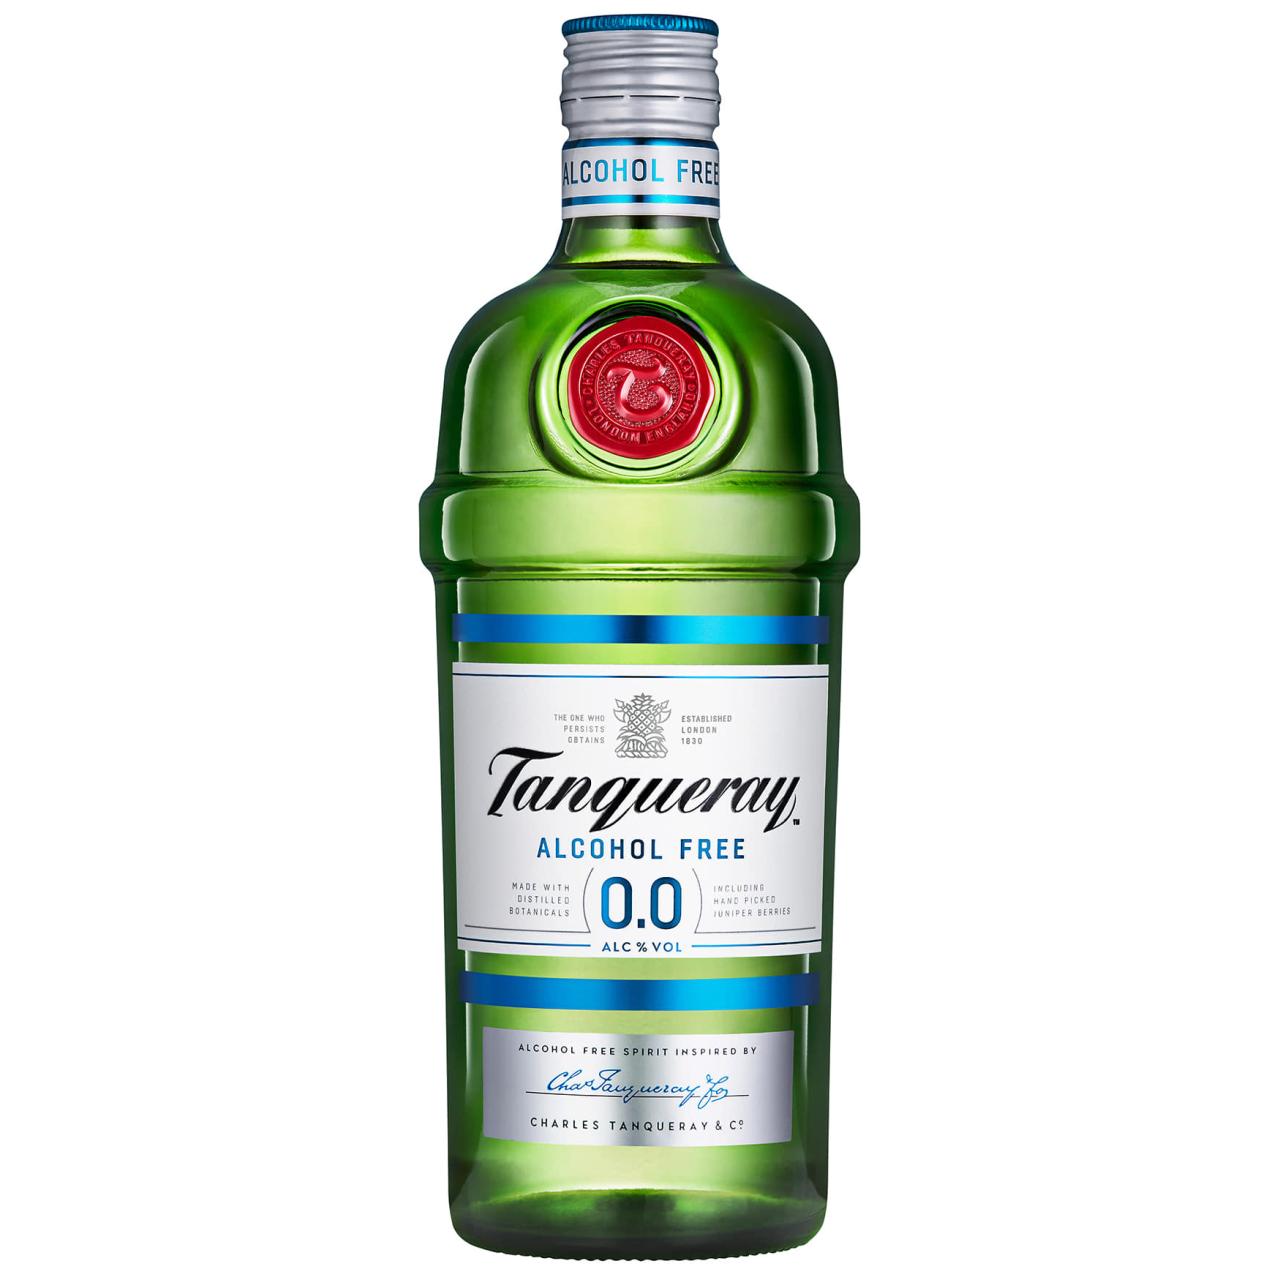 Tanqueray Gin 0,0% 0,7l